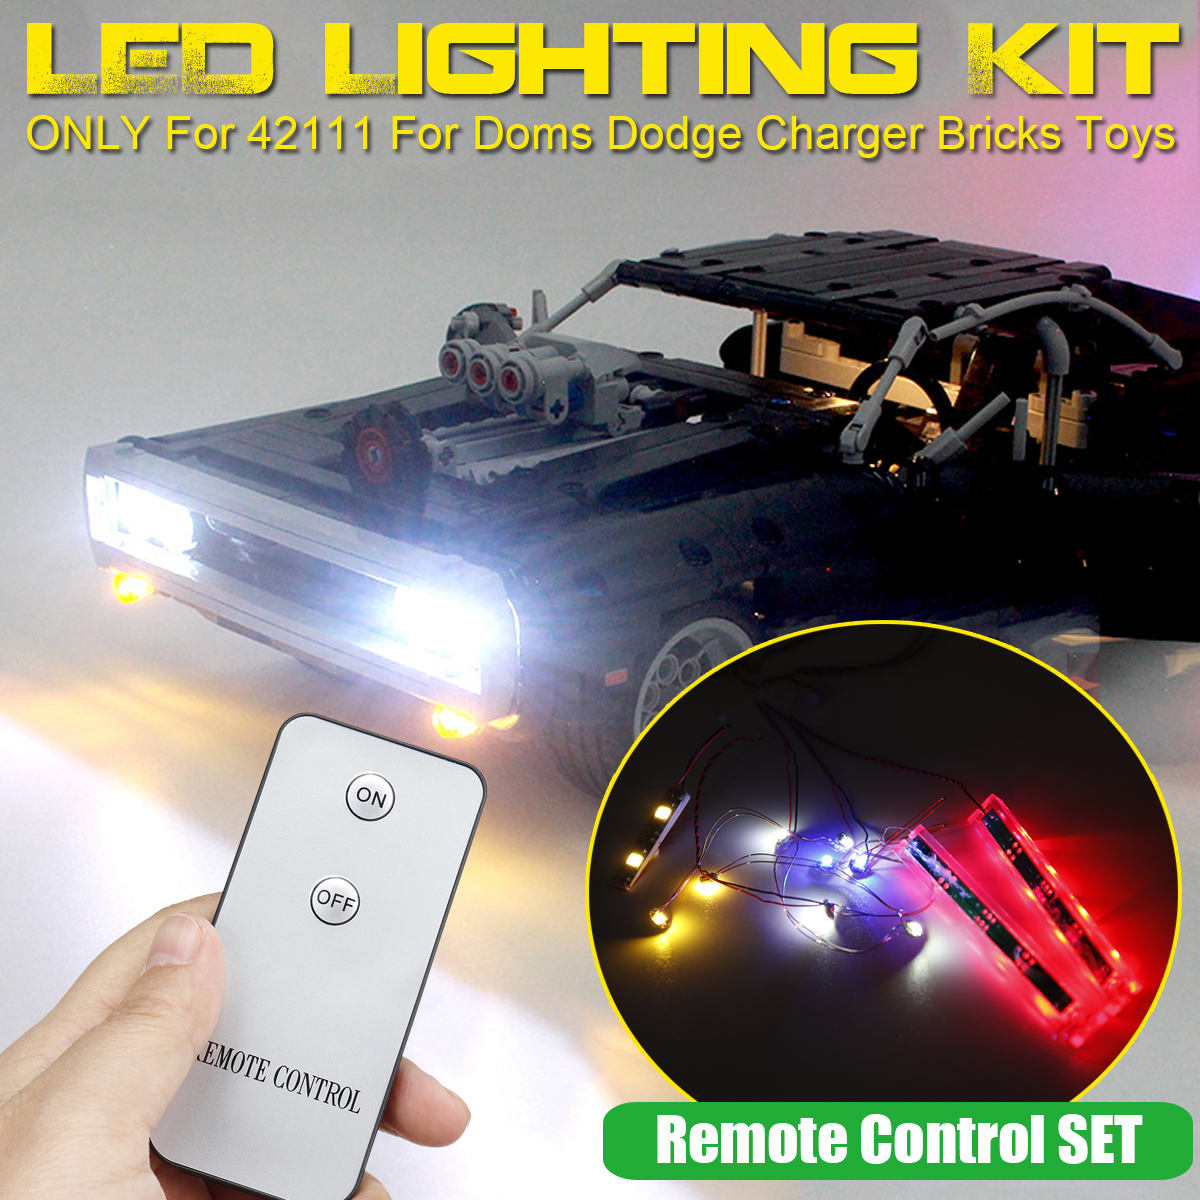 LED-Light-Lighting-Kit-Only-for-LEGO-42111-for-Doms-Dodge-Charger-Car-Bricks-Toy-1721042-11